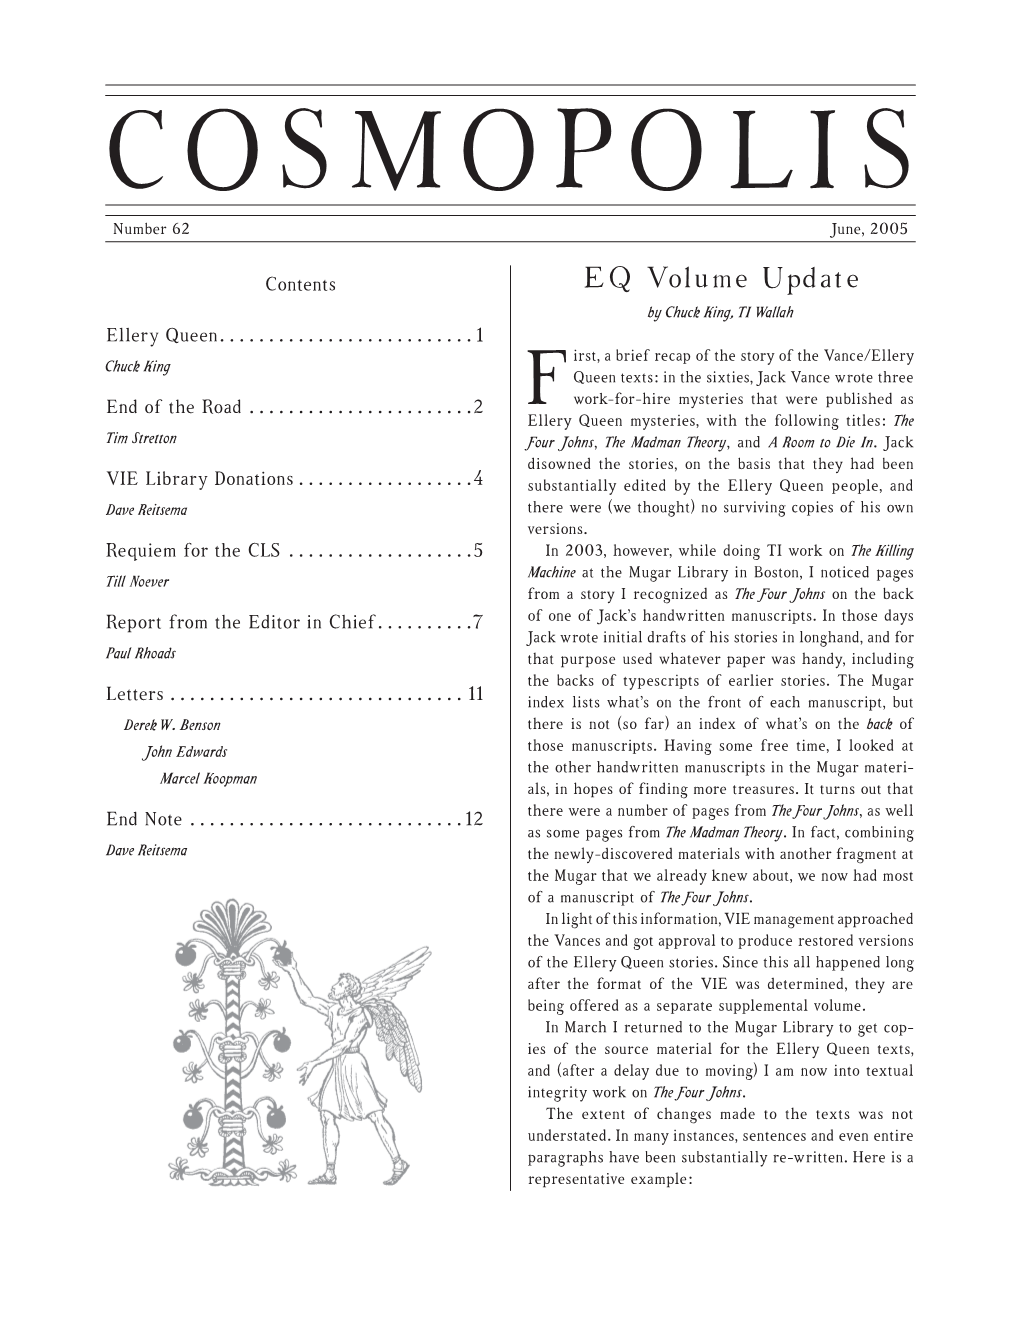 Cosmopolis#62